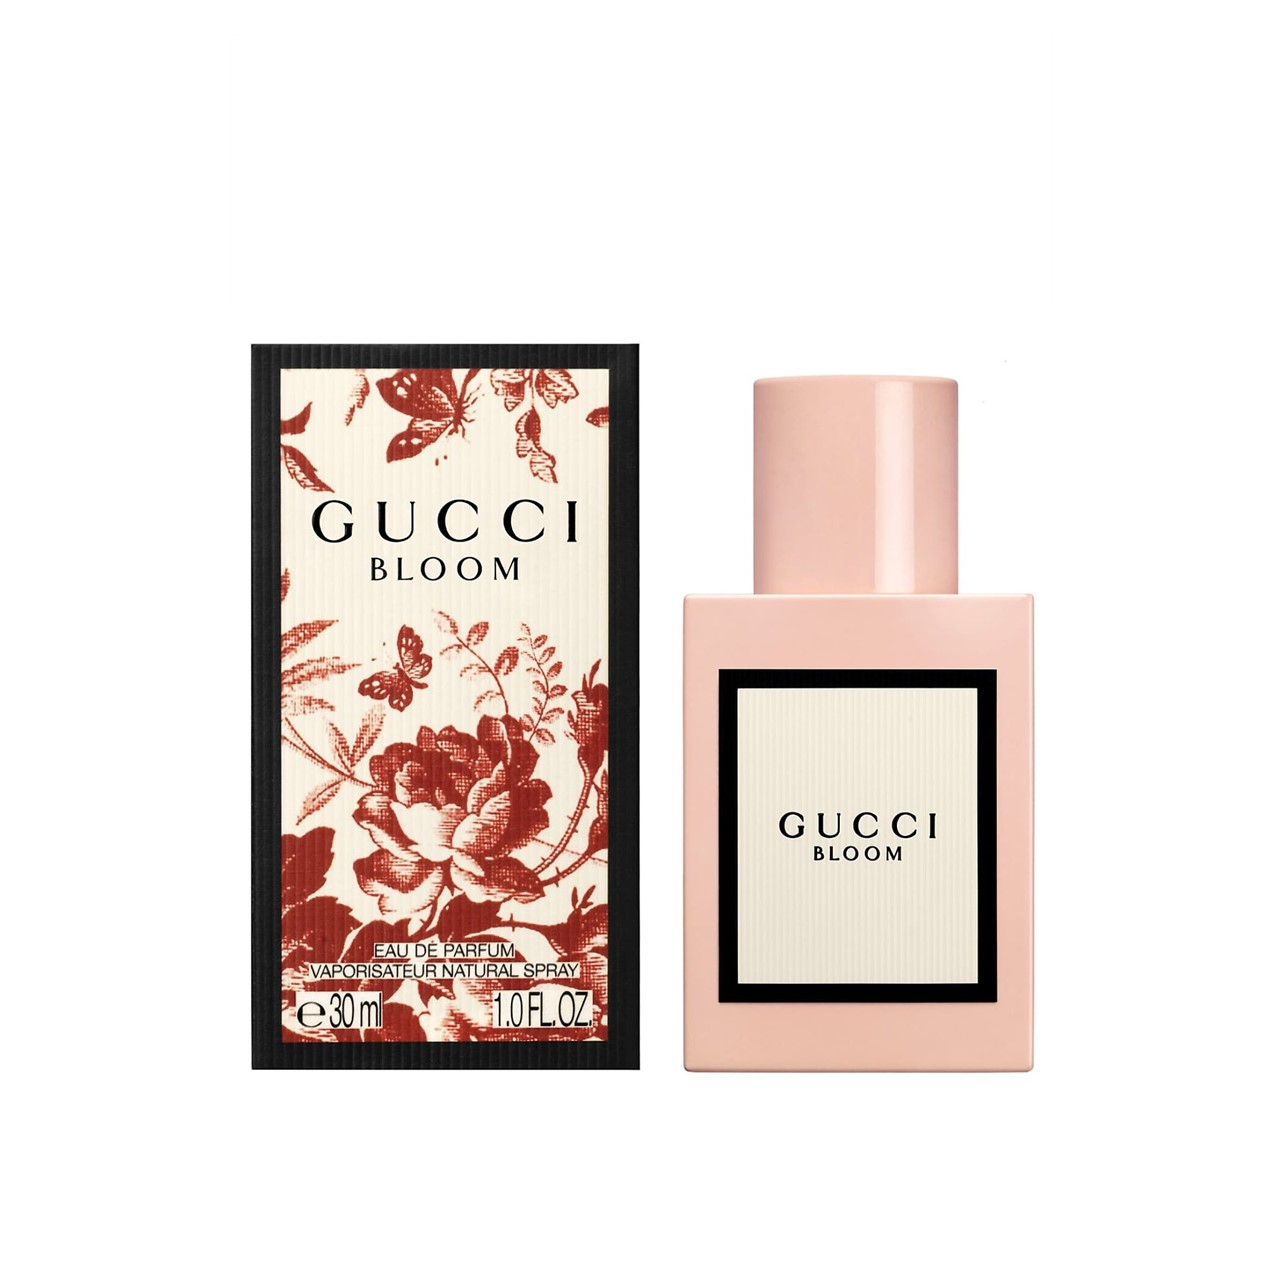 30ml Eau USA de Gucci · Bloom (1.0fl oz) Parfum Buy